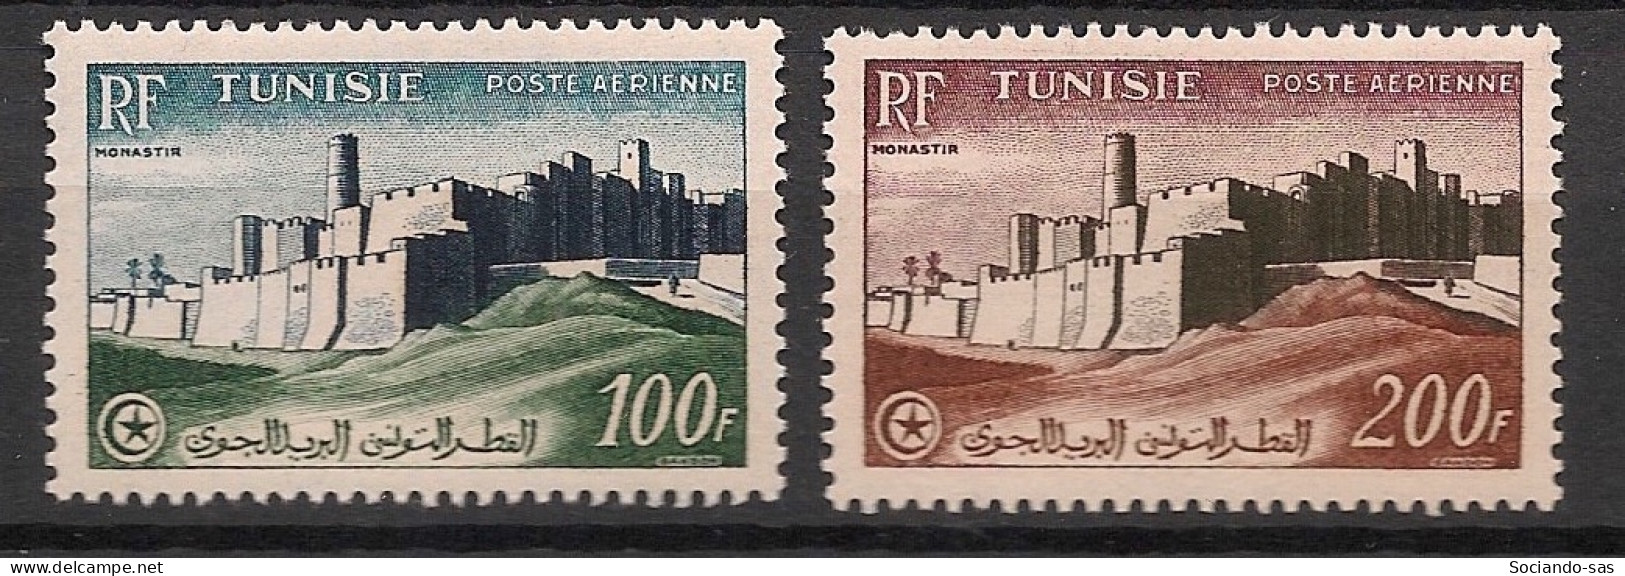 TUNISIE - 1954 - Poste Aérienne PA N°YT. 20 à 21 - Série Complète - Neuf* / MH VF - Luftpost